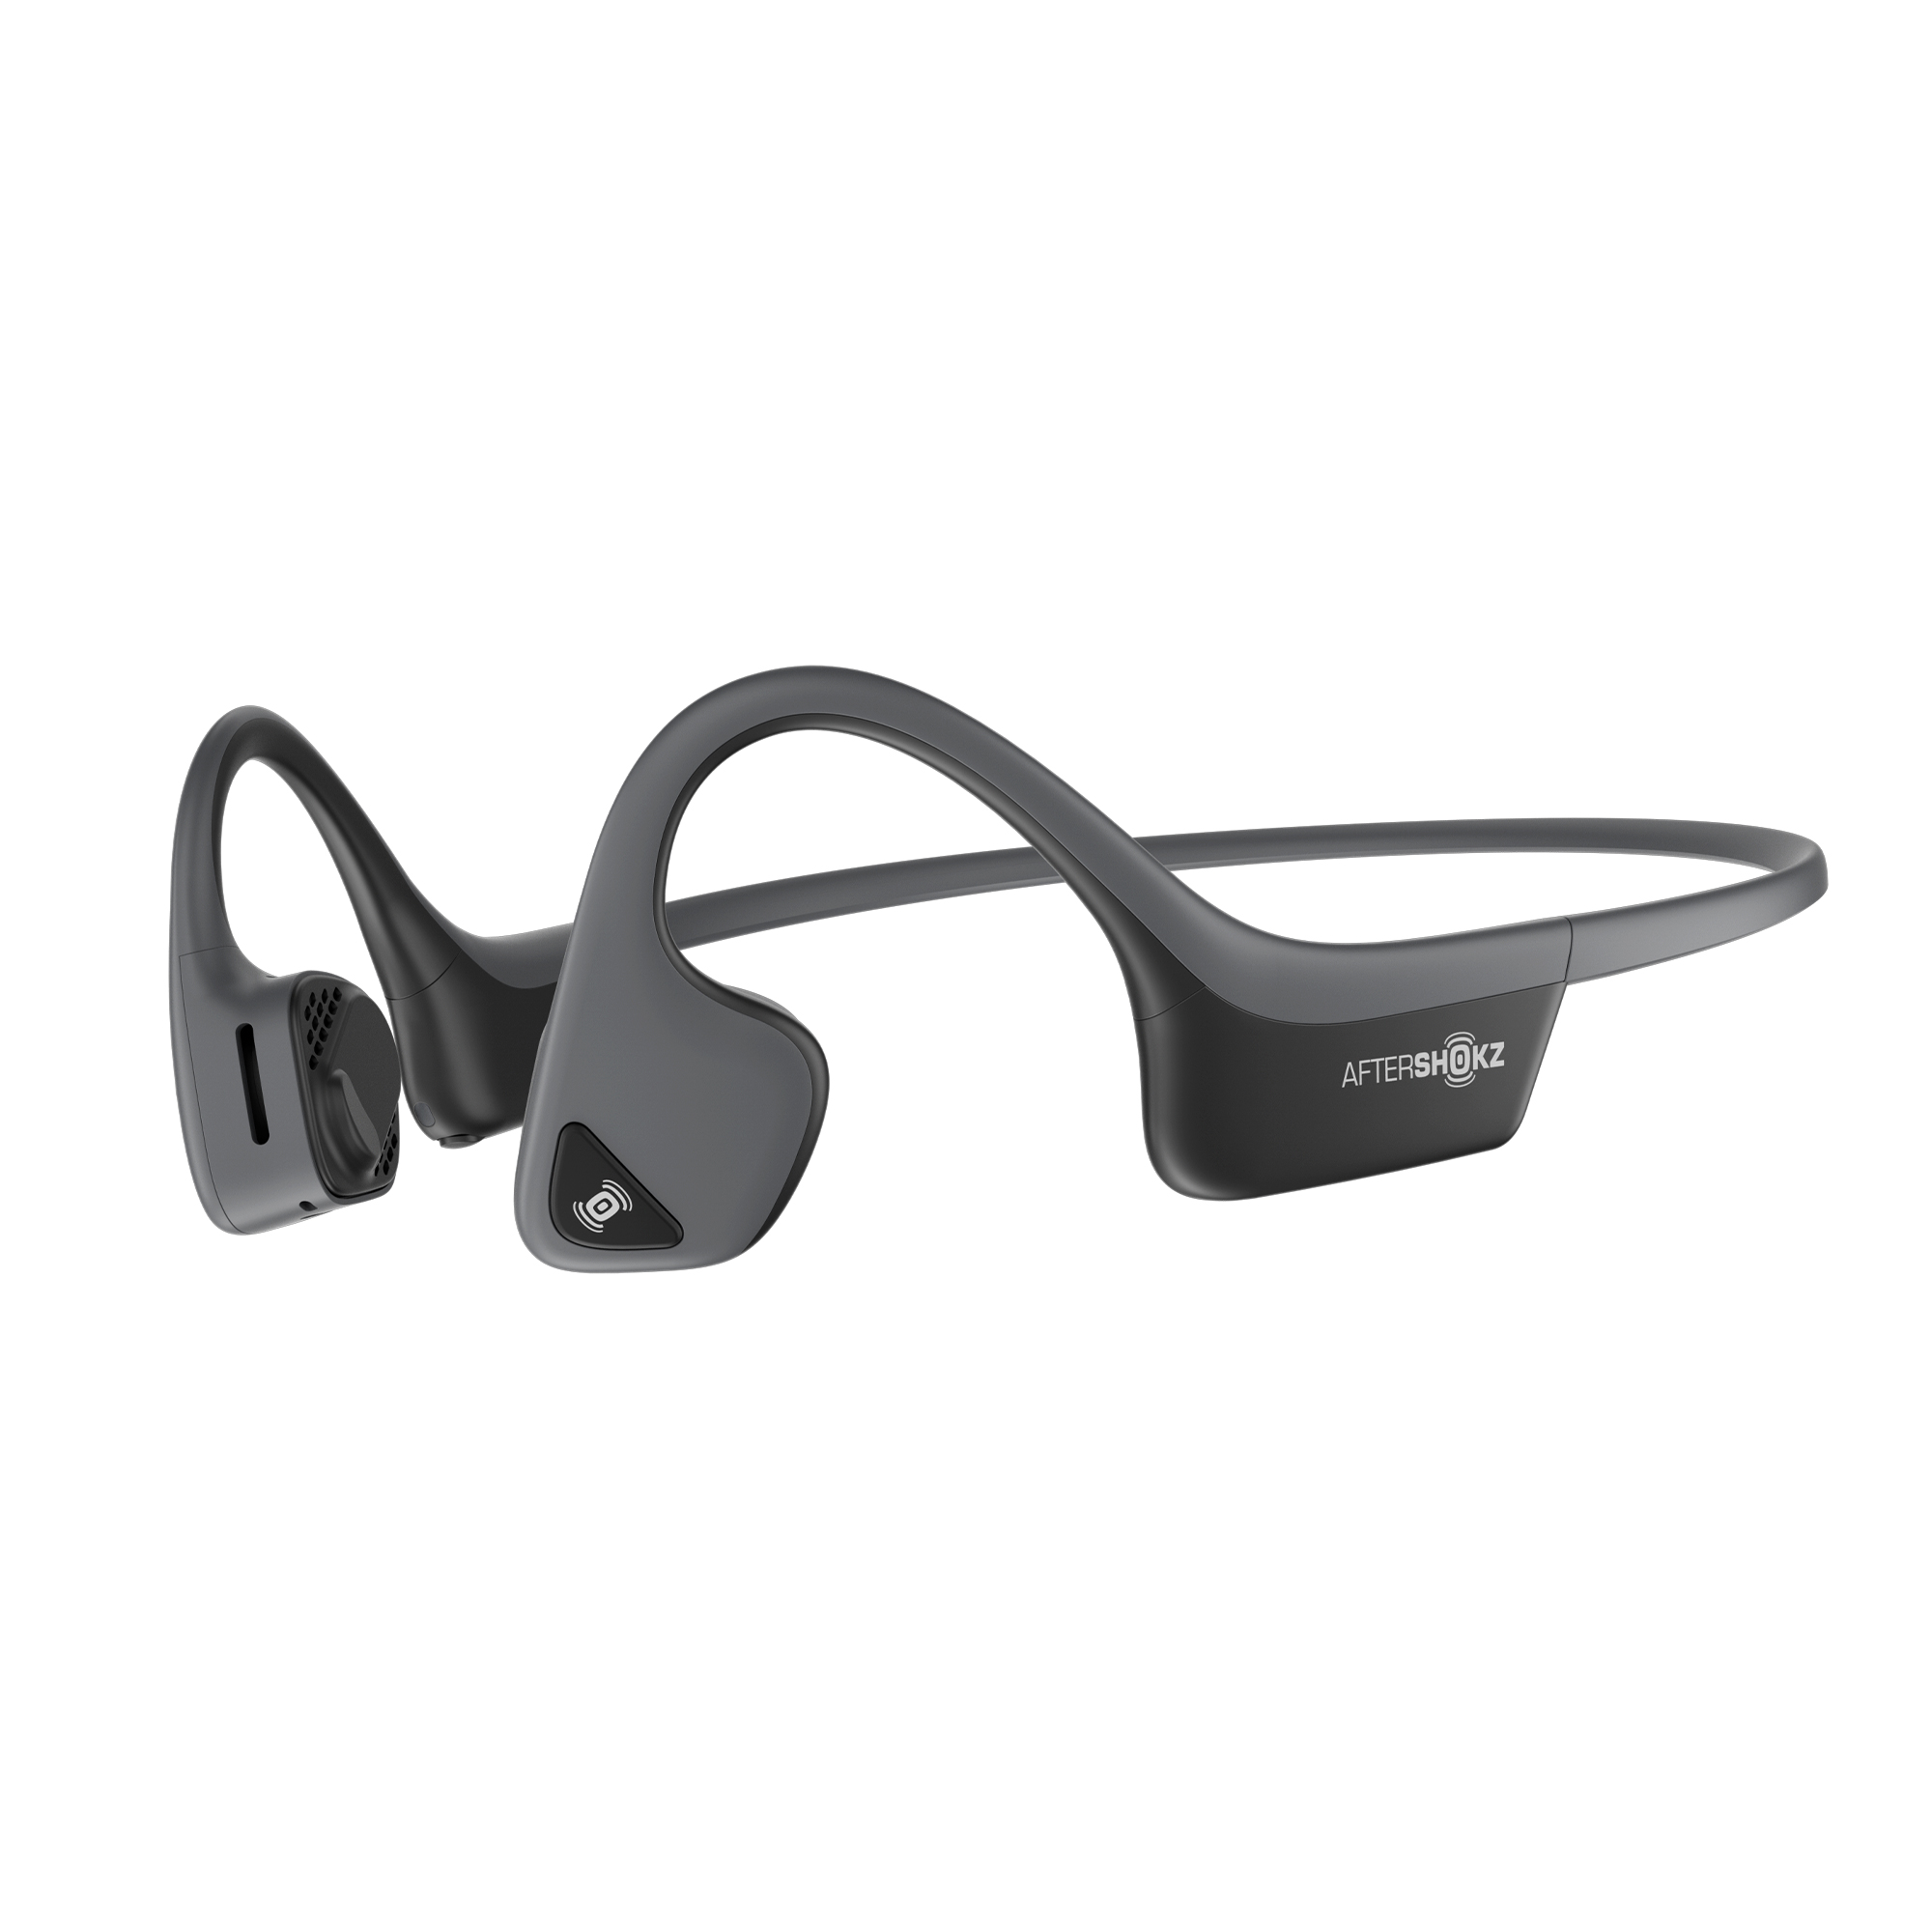 AfterShokz Bluetooth Behind-the-Neck, On-Ear Headphones, Slate Grey, 855121007311 - image 1 of 4